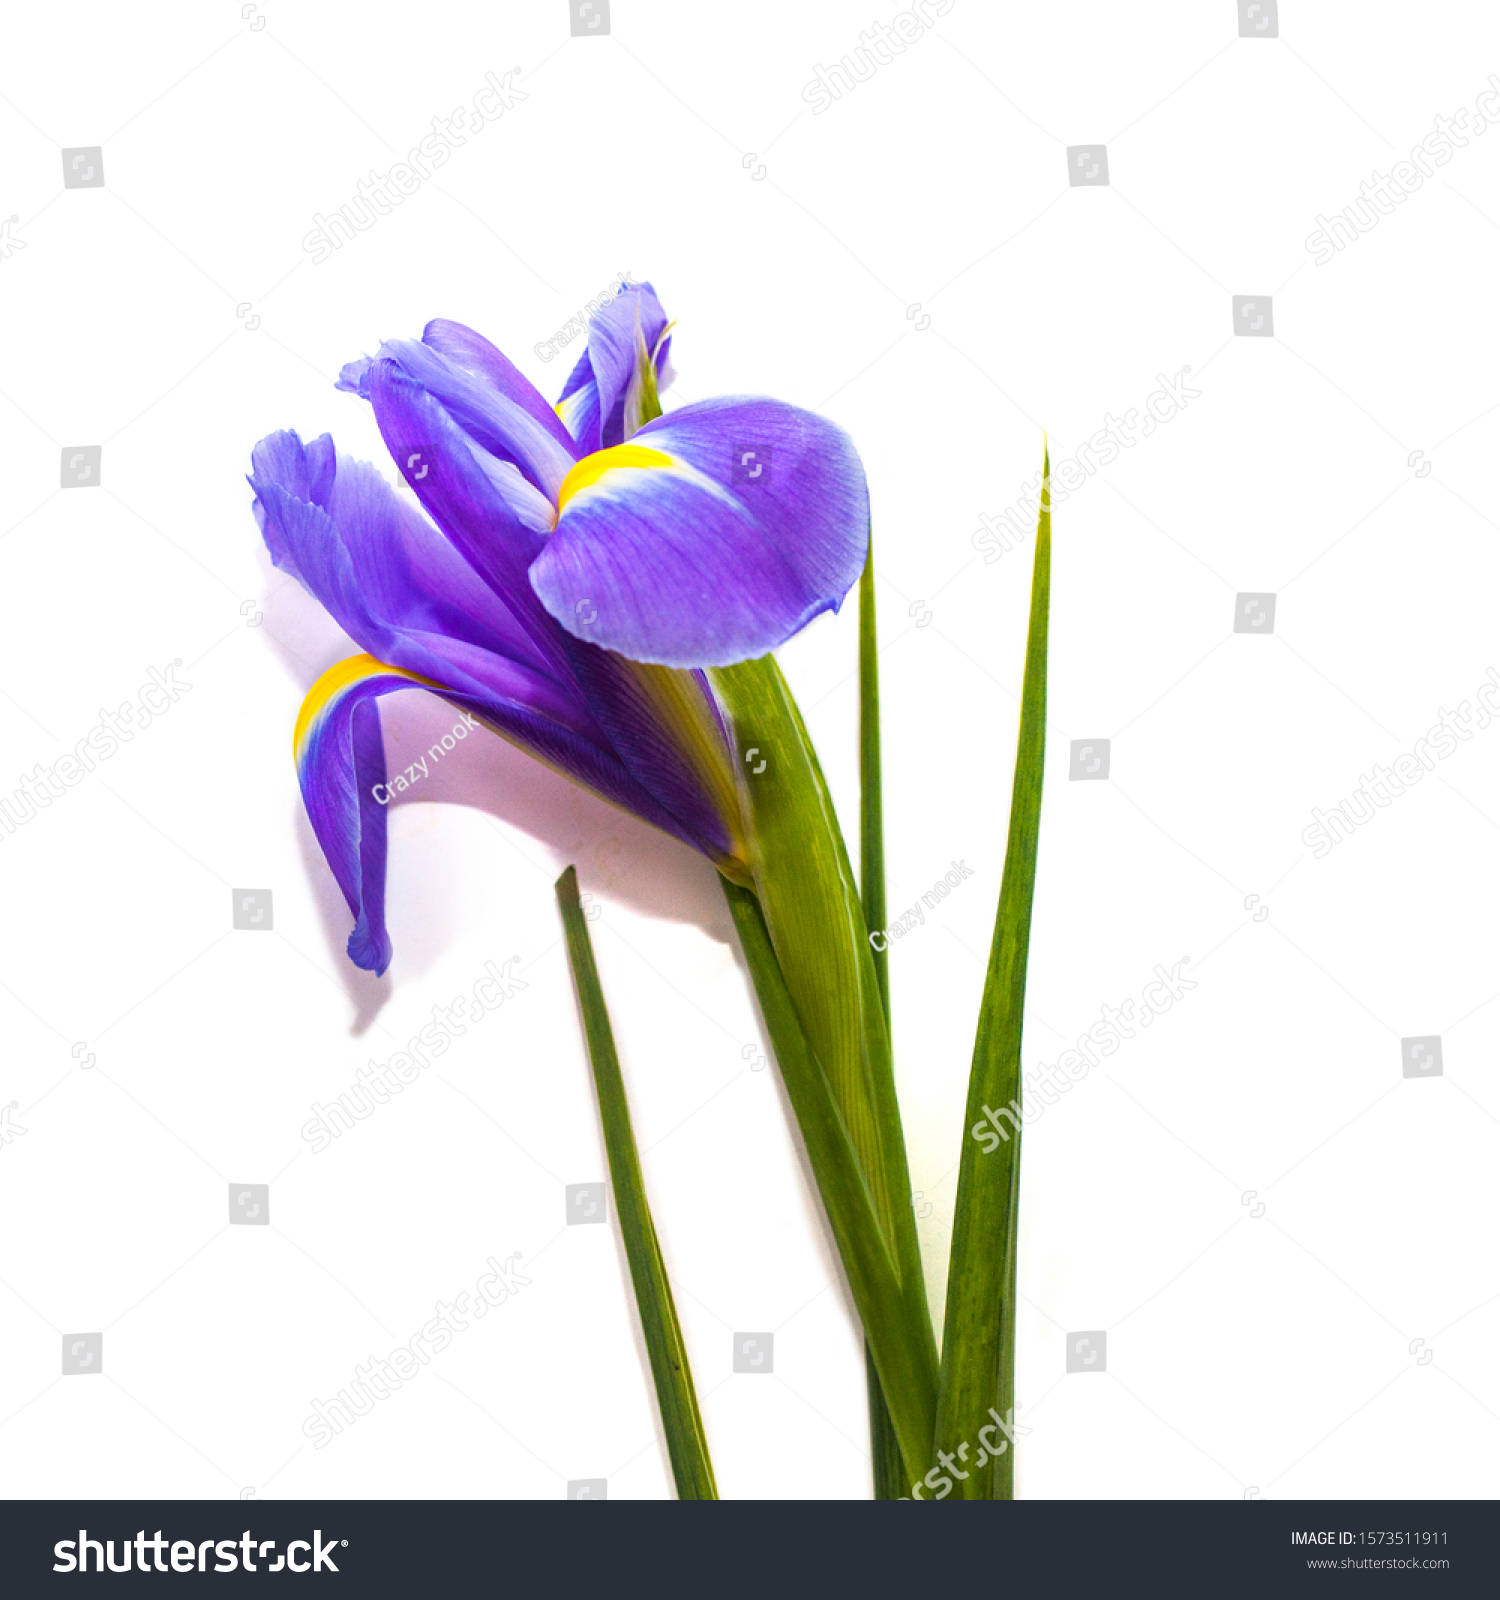 Purple iris on white background Images, Stock Photos & Vectors ...